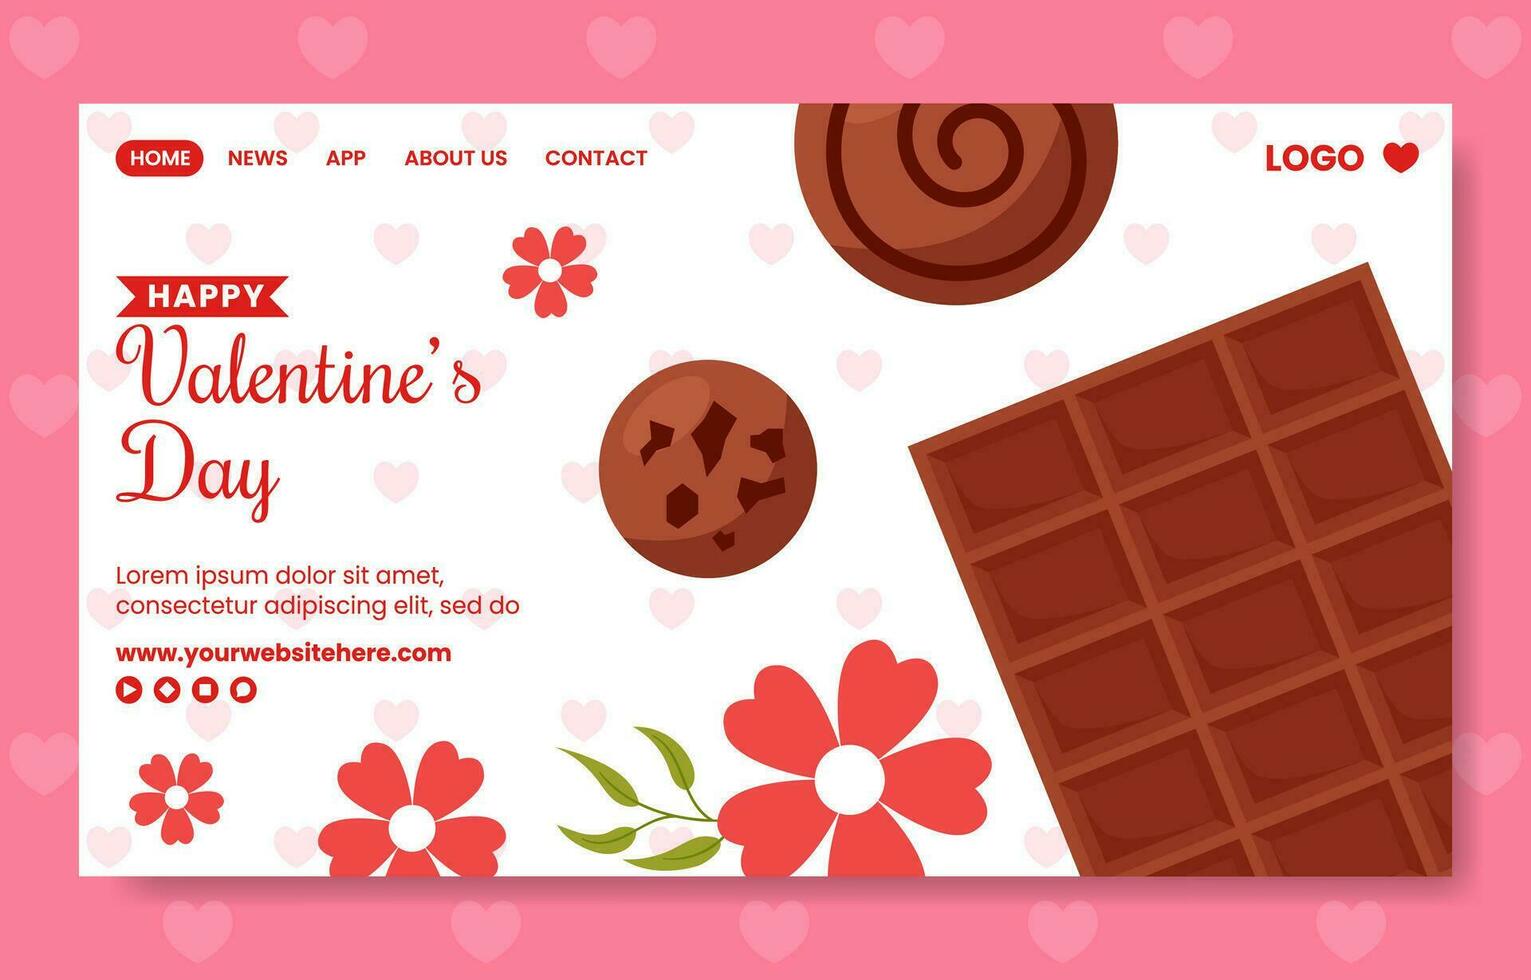 Happy Valentine's Day Social Media Landing Page Cartoon Templates Background Illustration vector